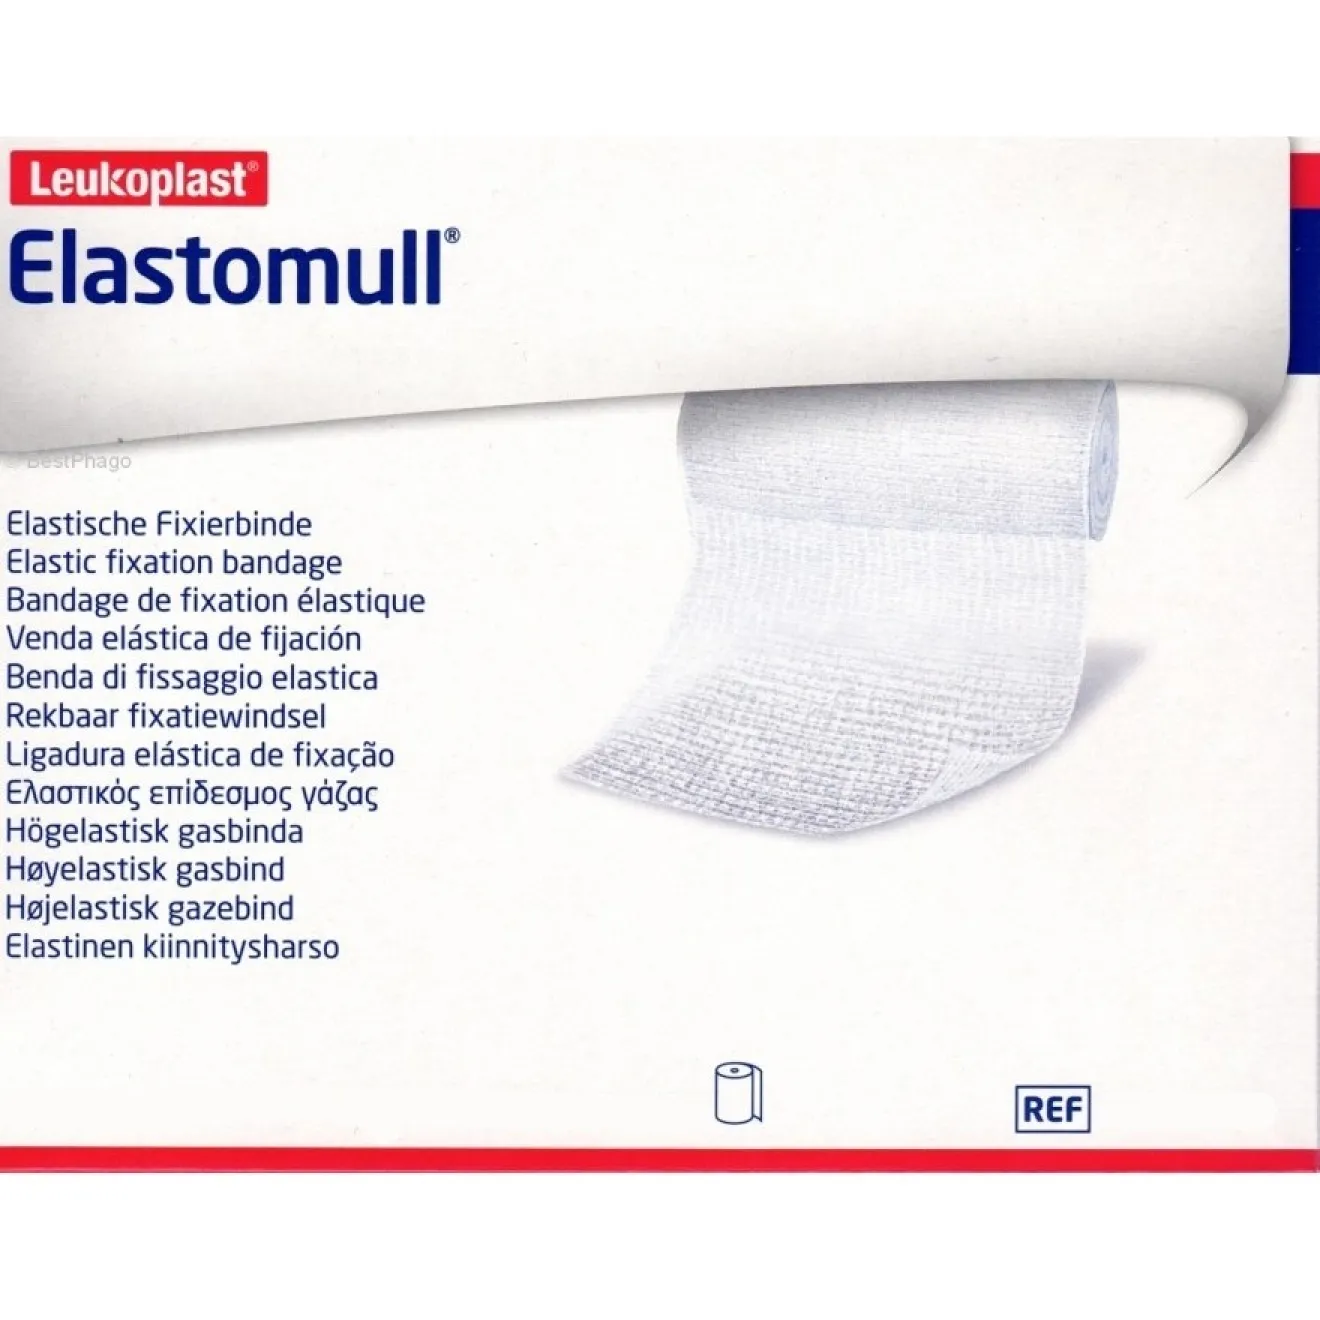 Elastomull 4mx8cm elastische Fixierbinde 2101 20 ST